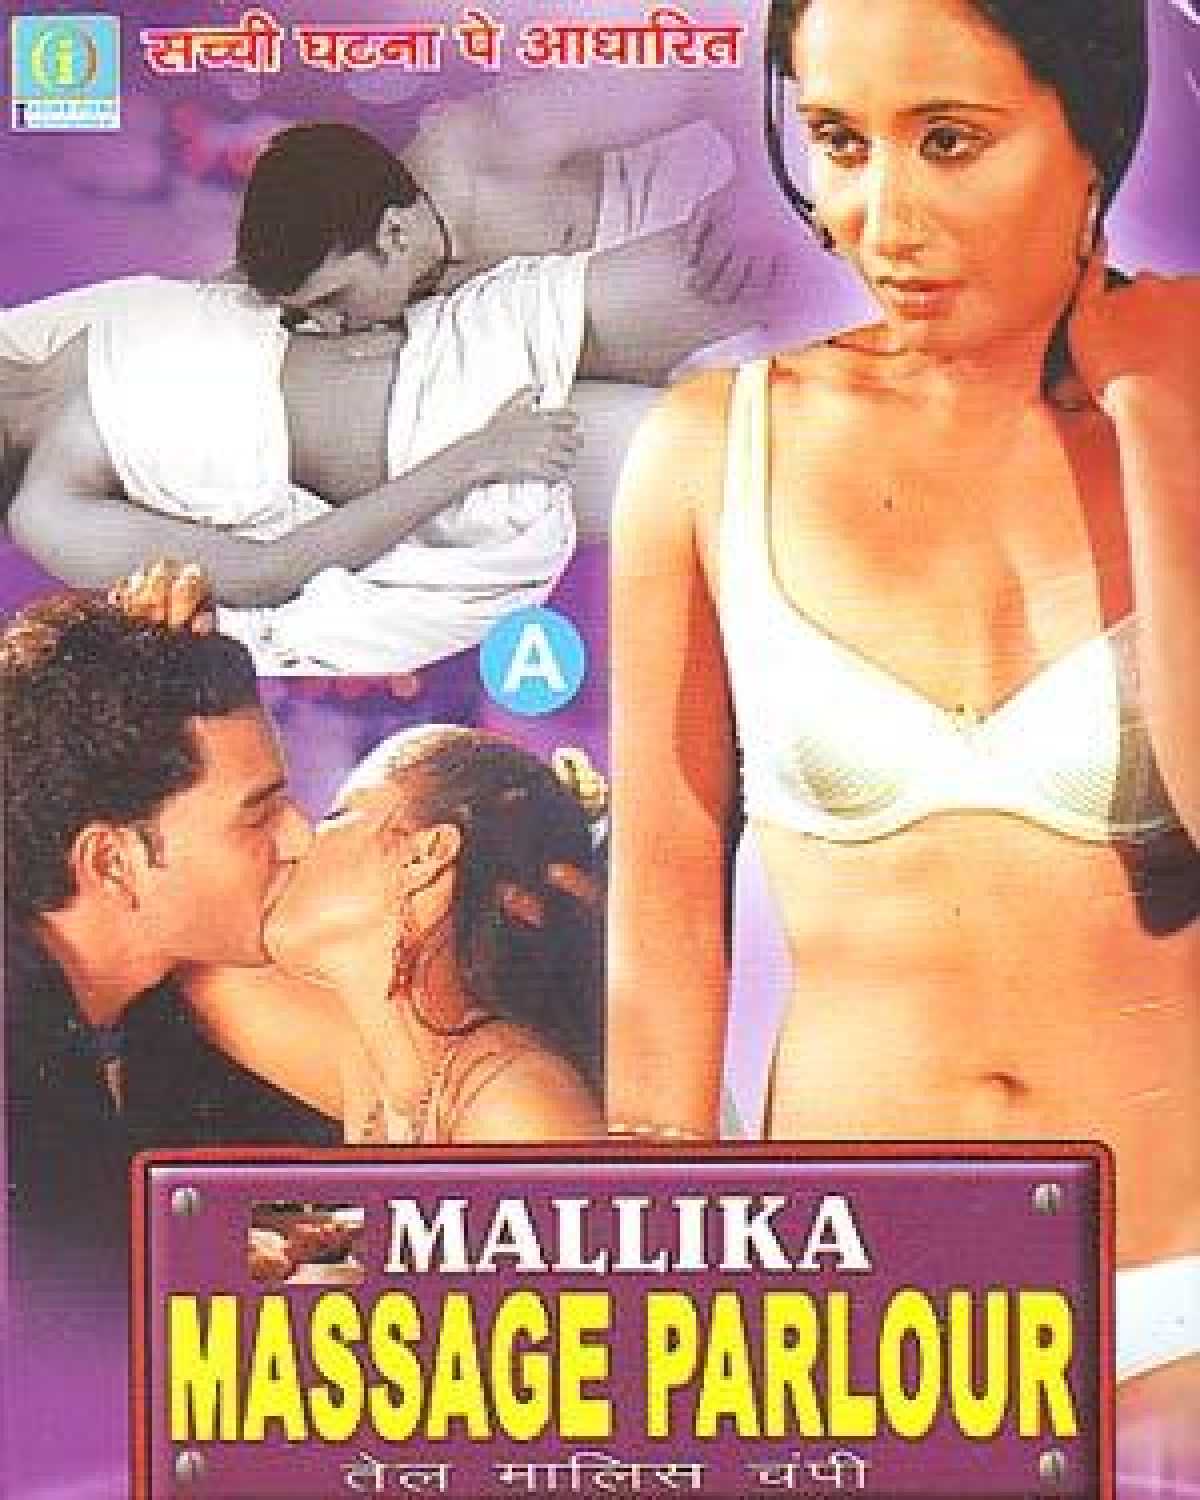 Mallika Massage Parlour (2006)